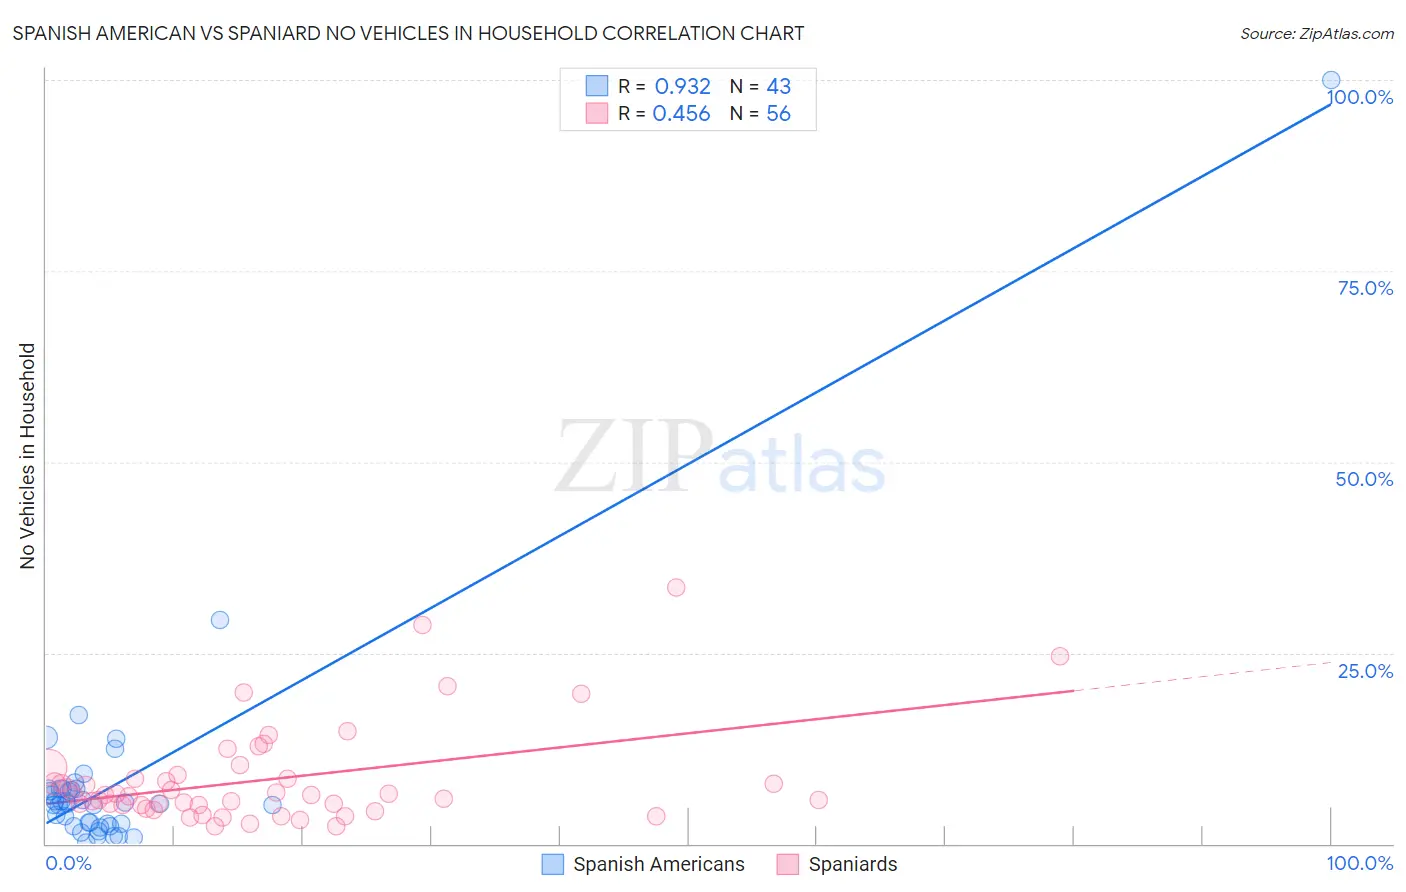 Spanish American vs Spaniard No Vehicles in Household